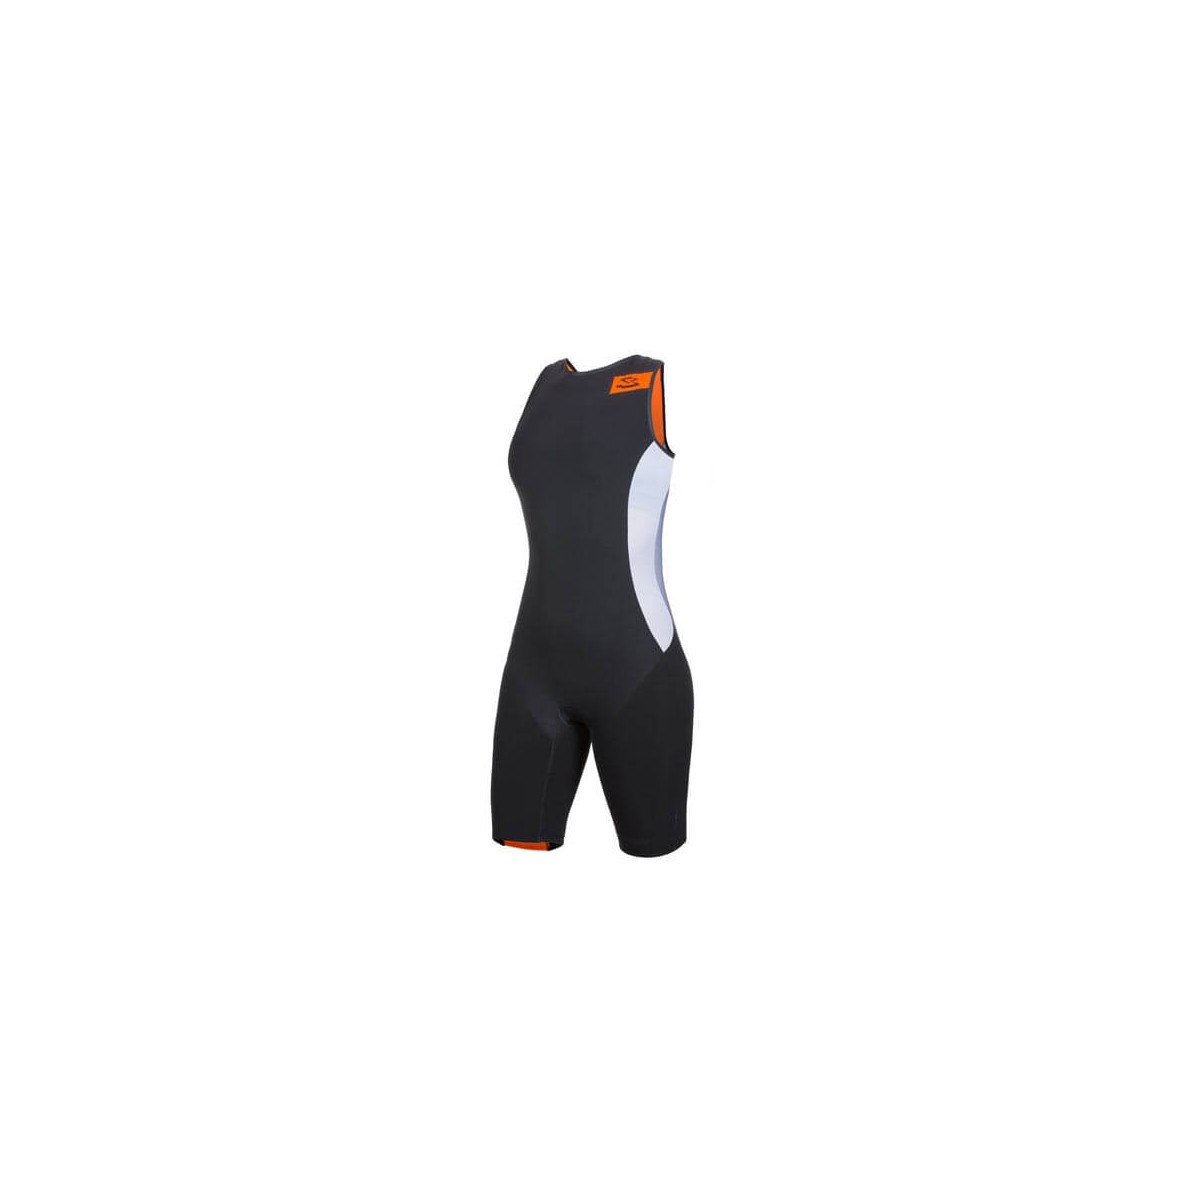 Spiuk Sprint Women's Tri Suit black / white / orange, Size M